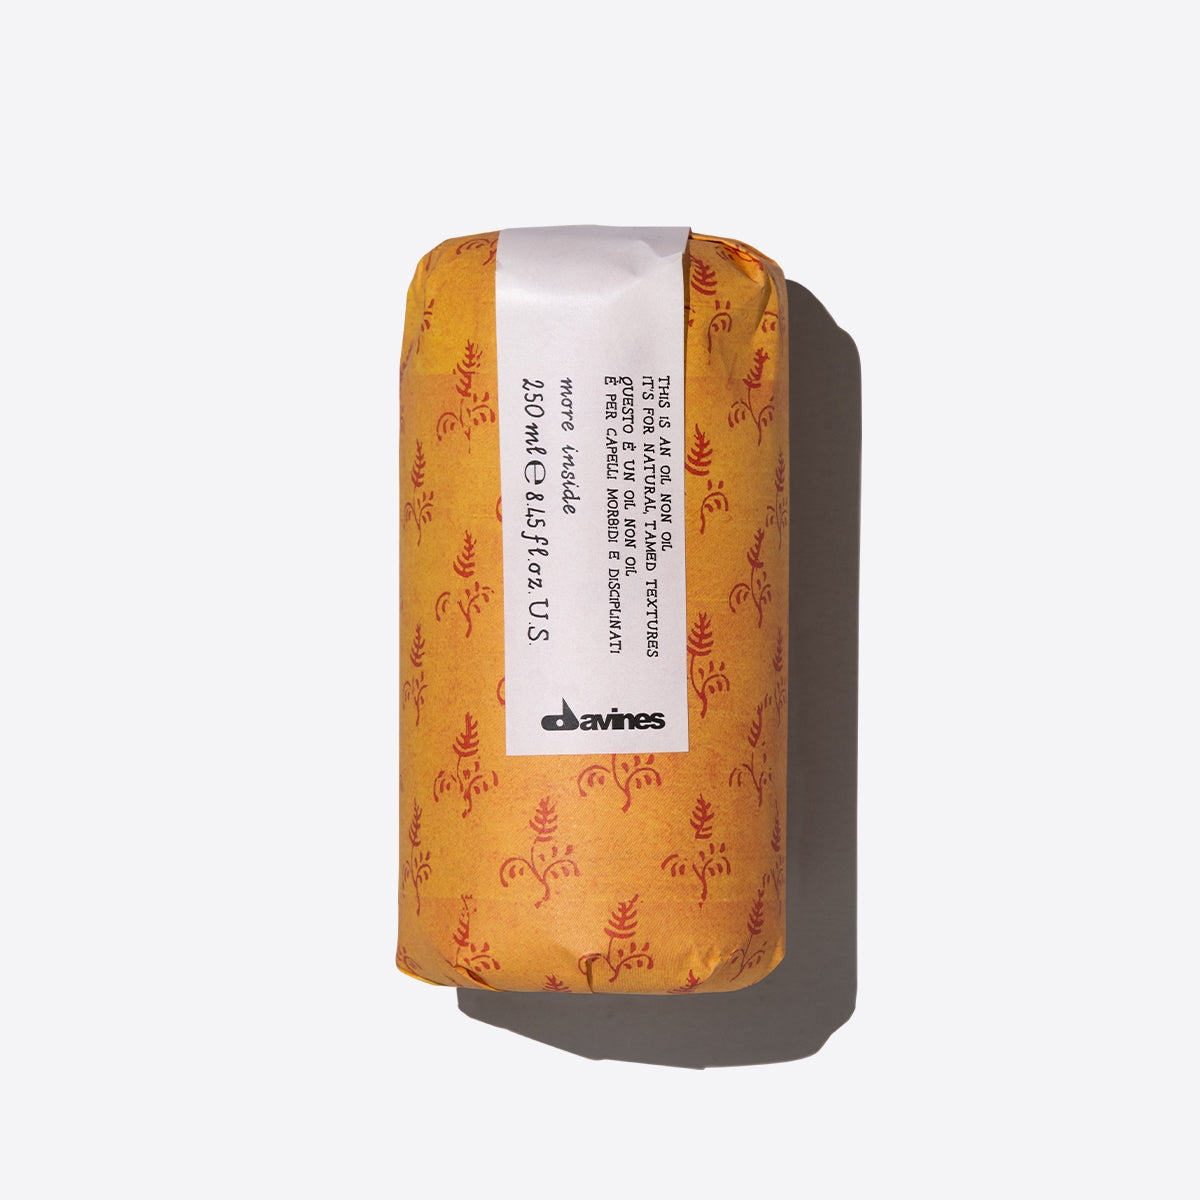 Davines 87086 MORE INSIDE Oil non Oil - Масло без масла для естественных послушных укладок 250 ml